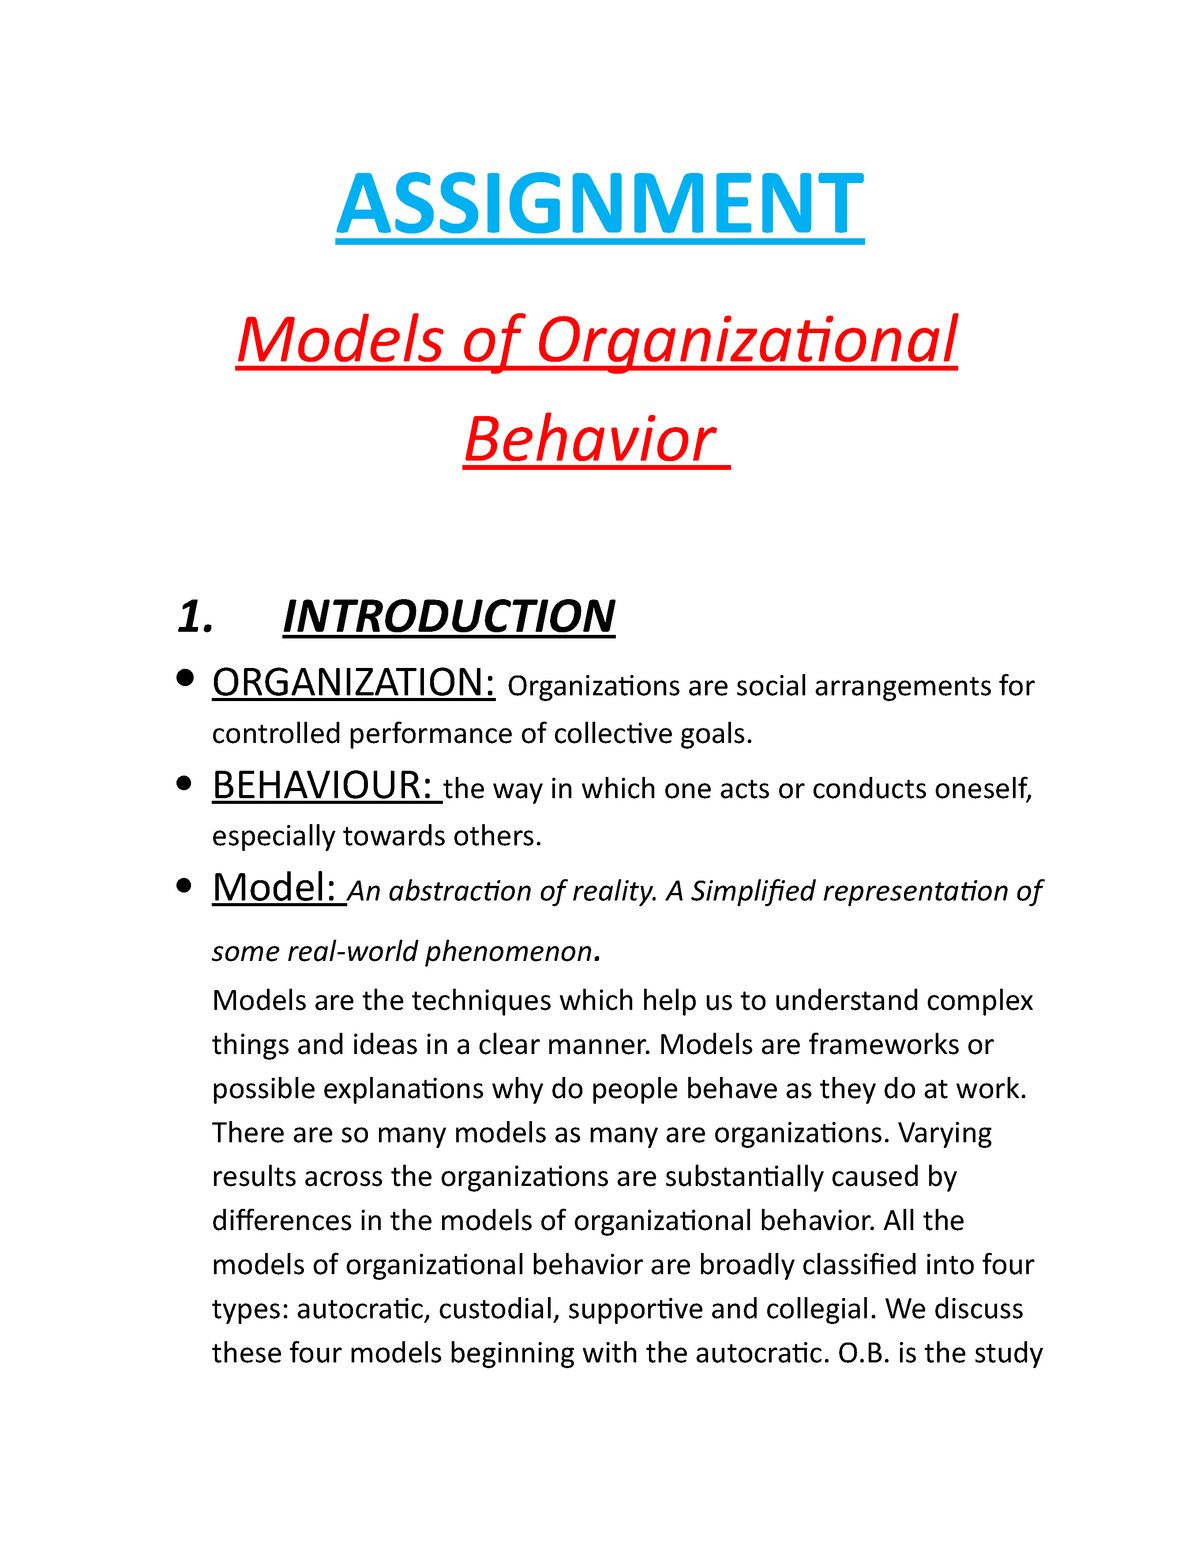 organisational behaviour assignment 1